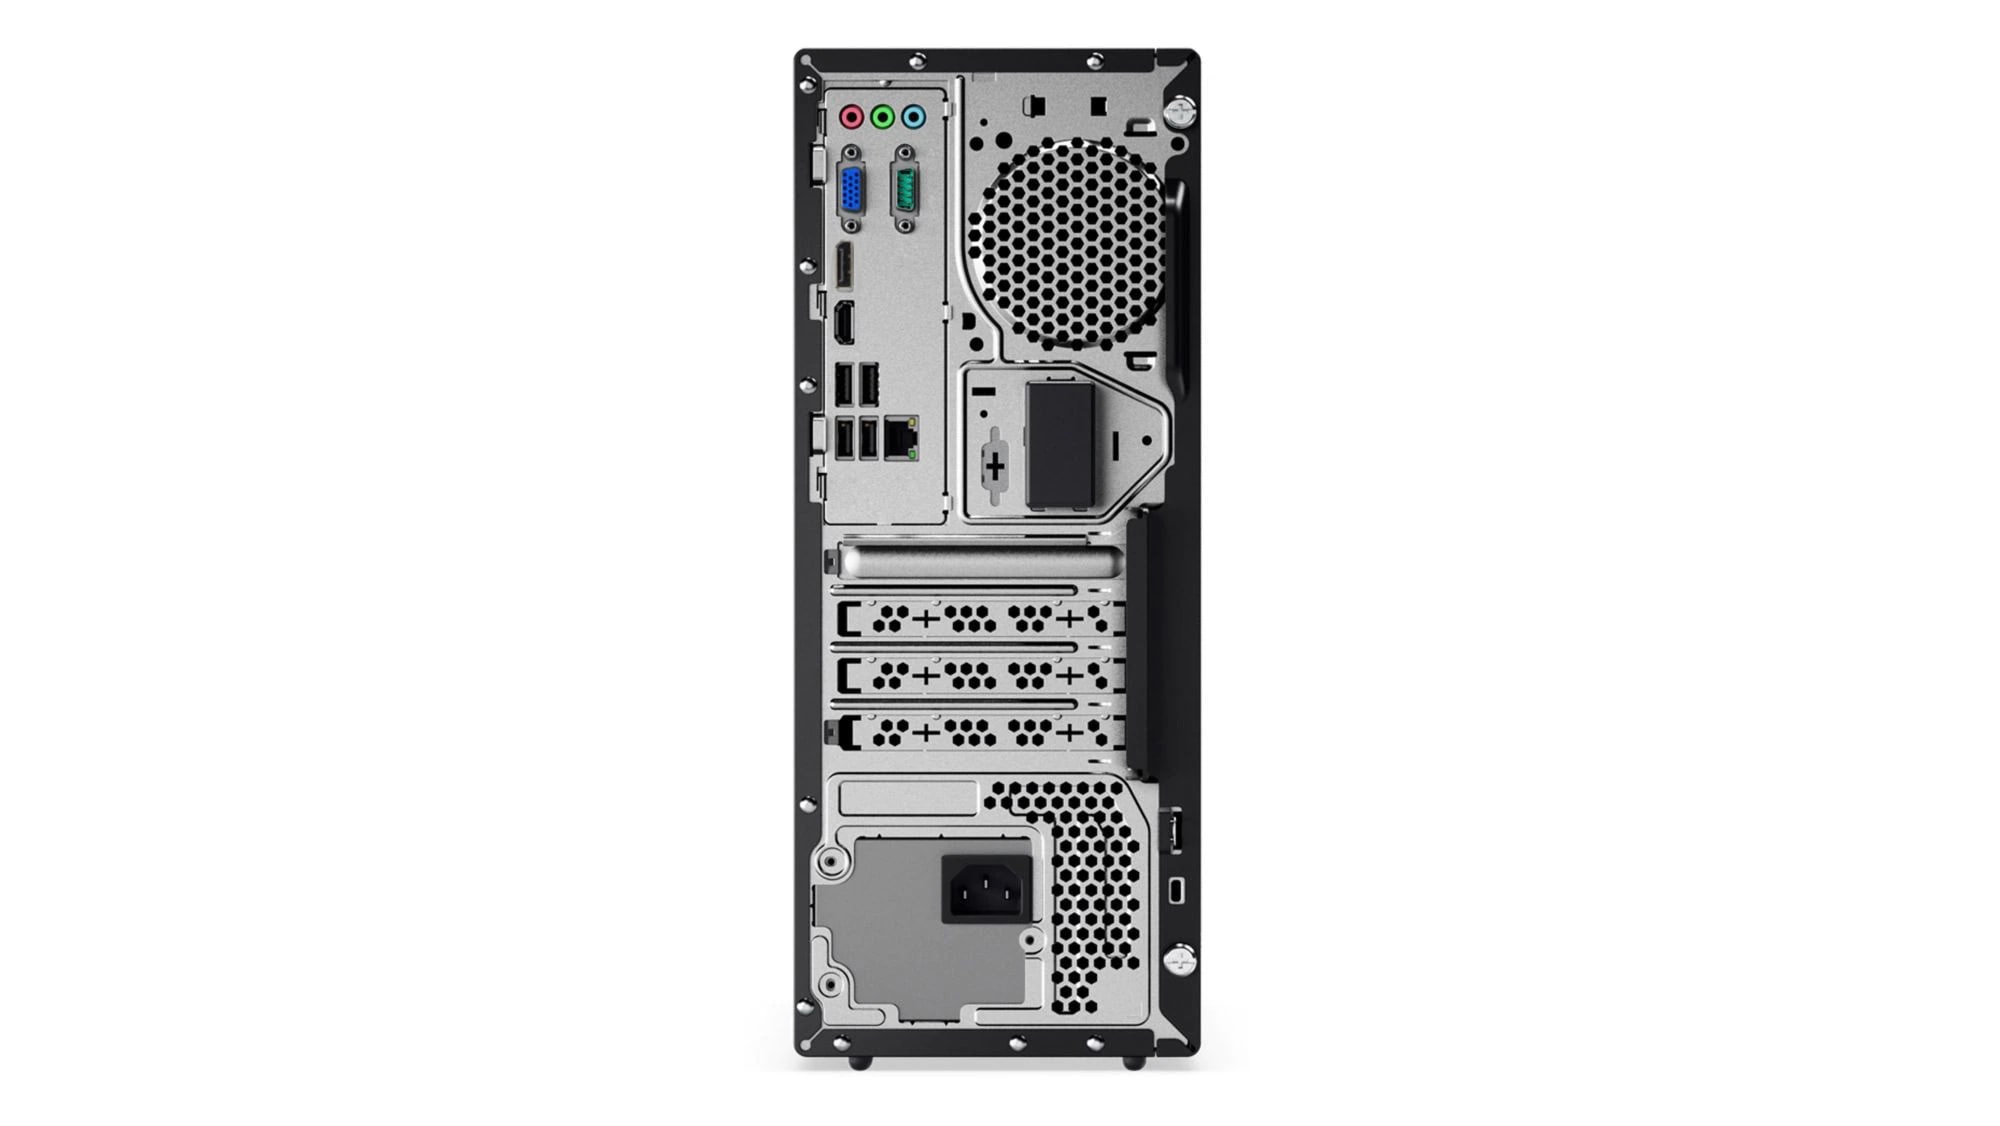 Lenovo V520 Mini Tower | ミニ・タワー型デスクトップ PC | レノボ 